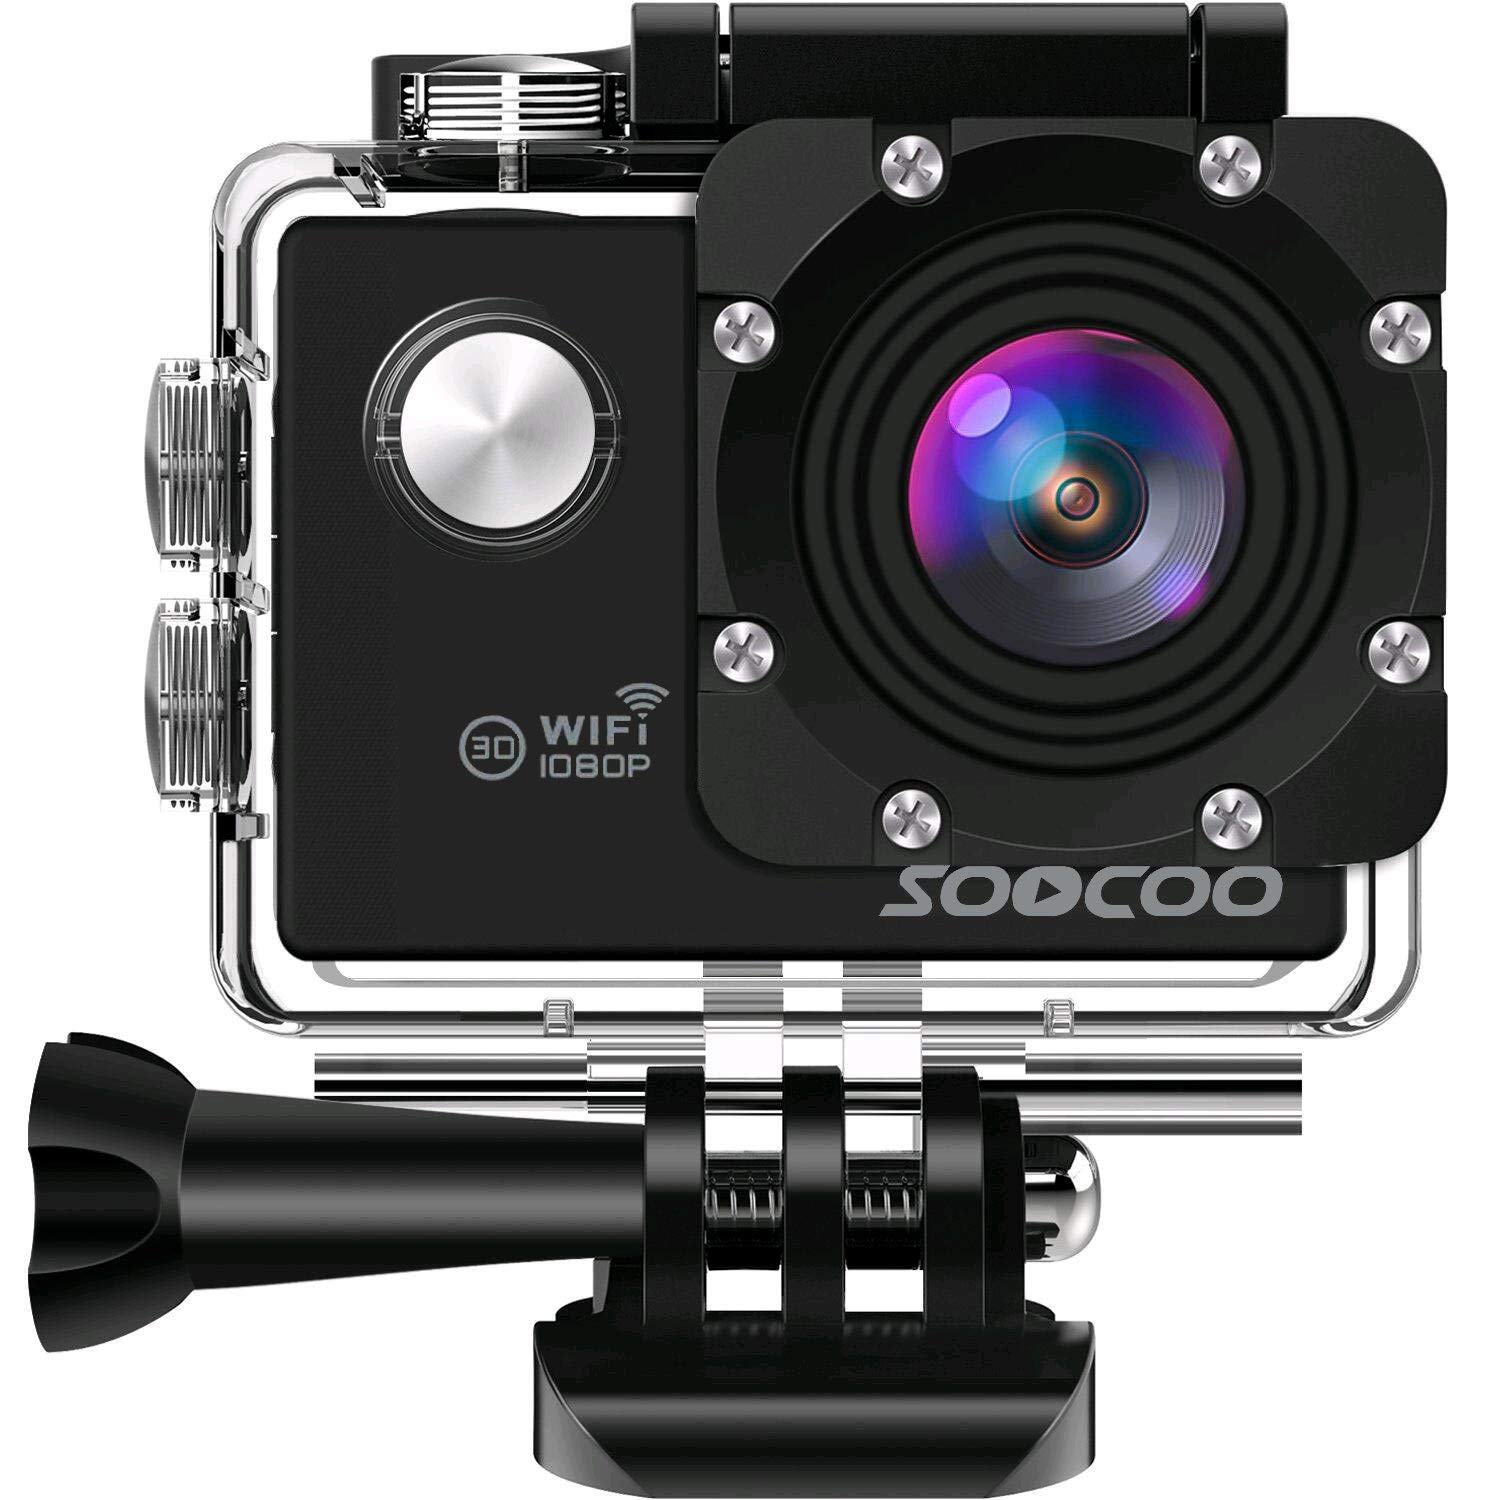 SOOCOO WIFI Action Camera, 12MP Full HD 1080P Sports Video Camera, Black